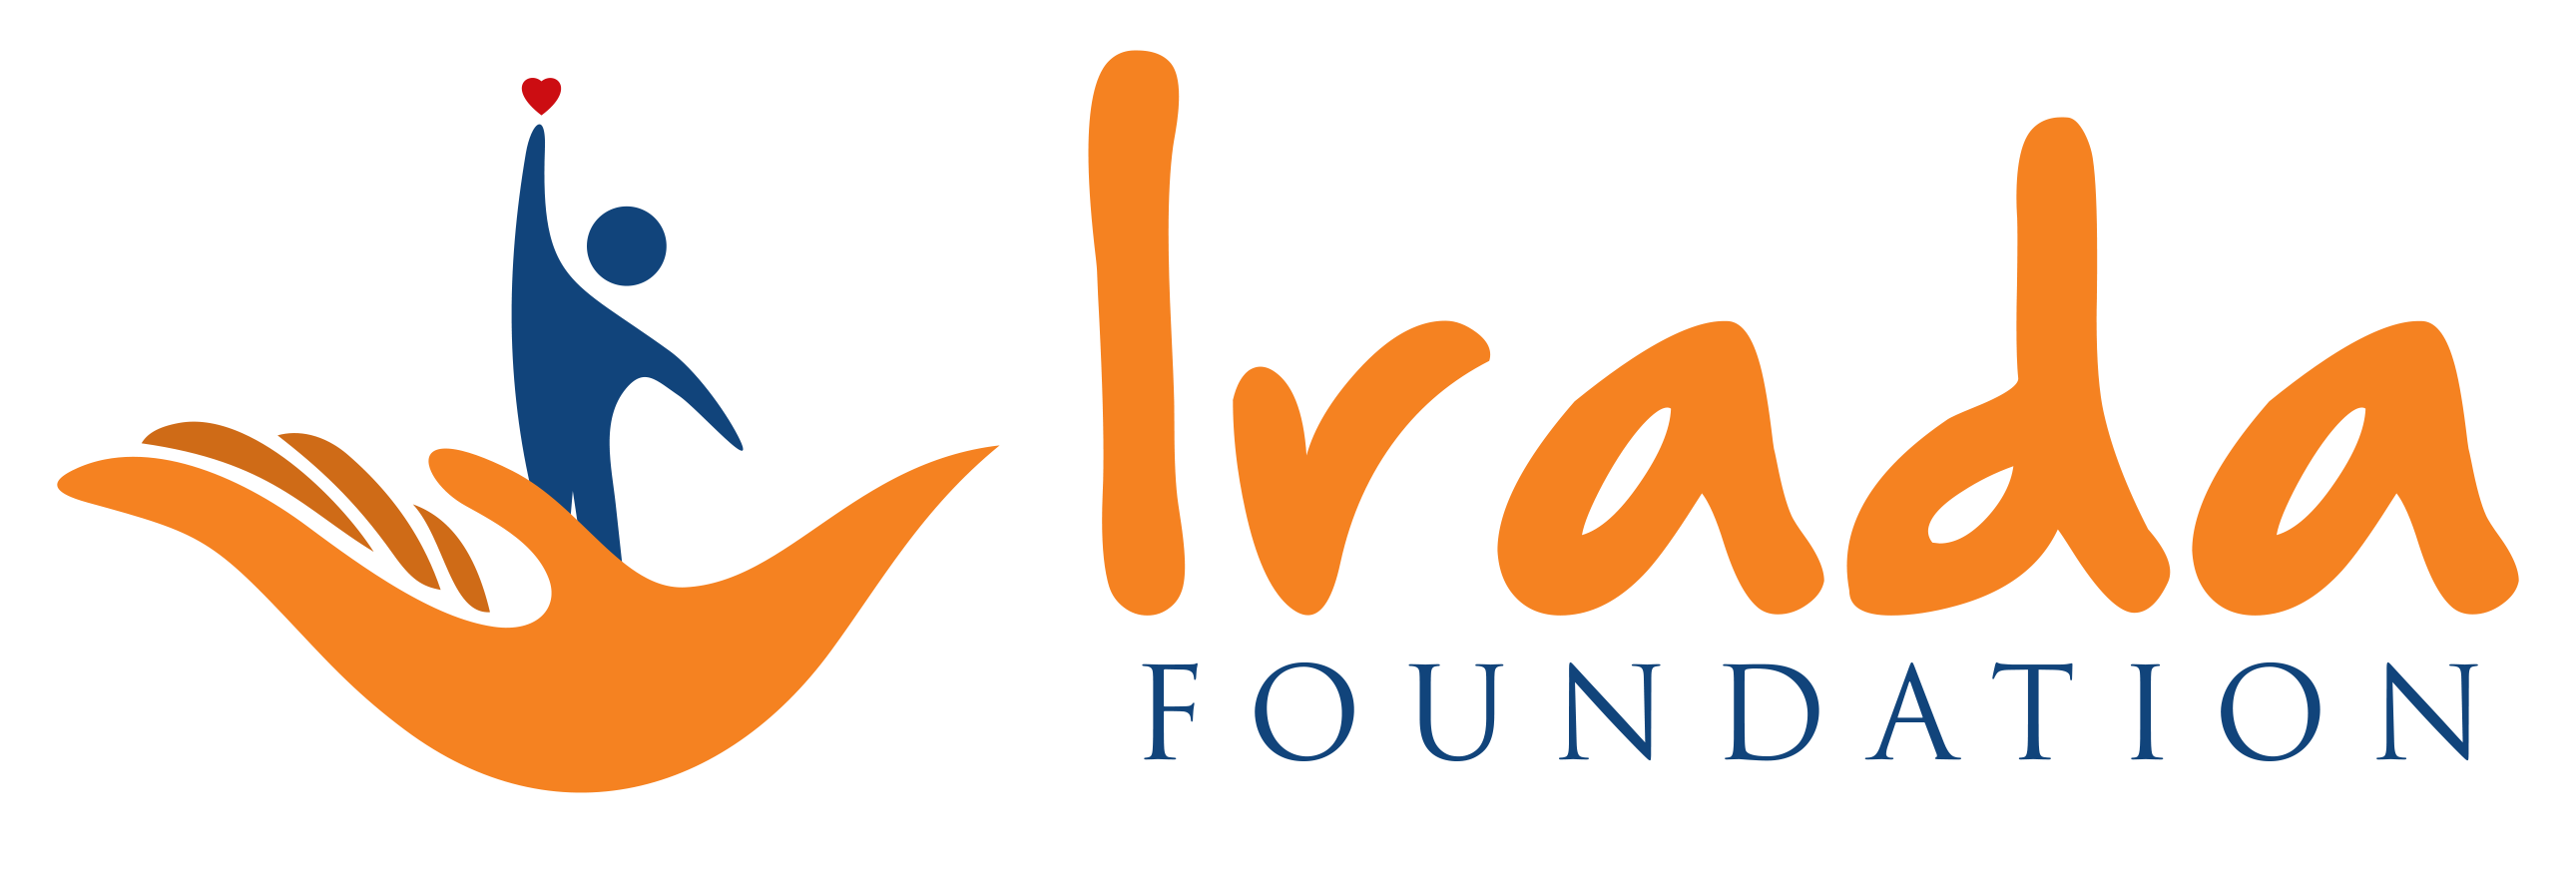 irada Foundation